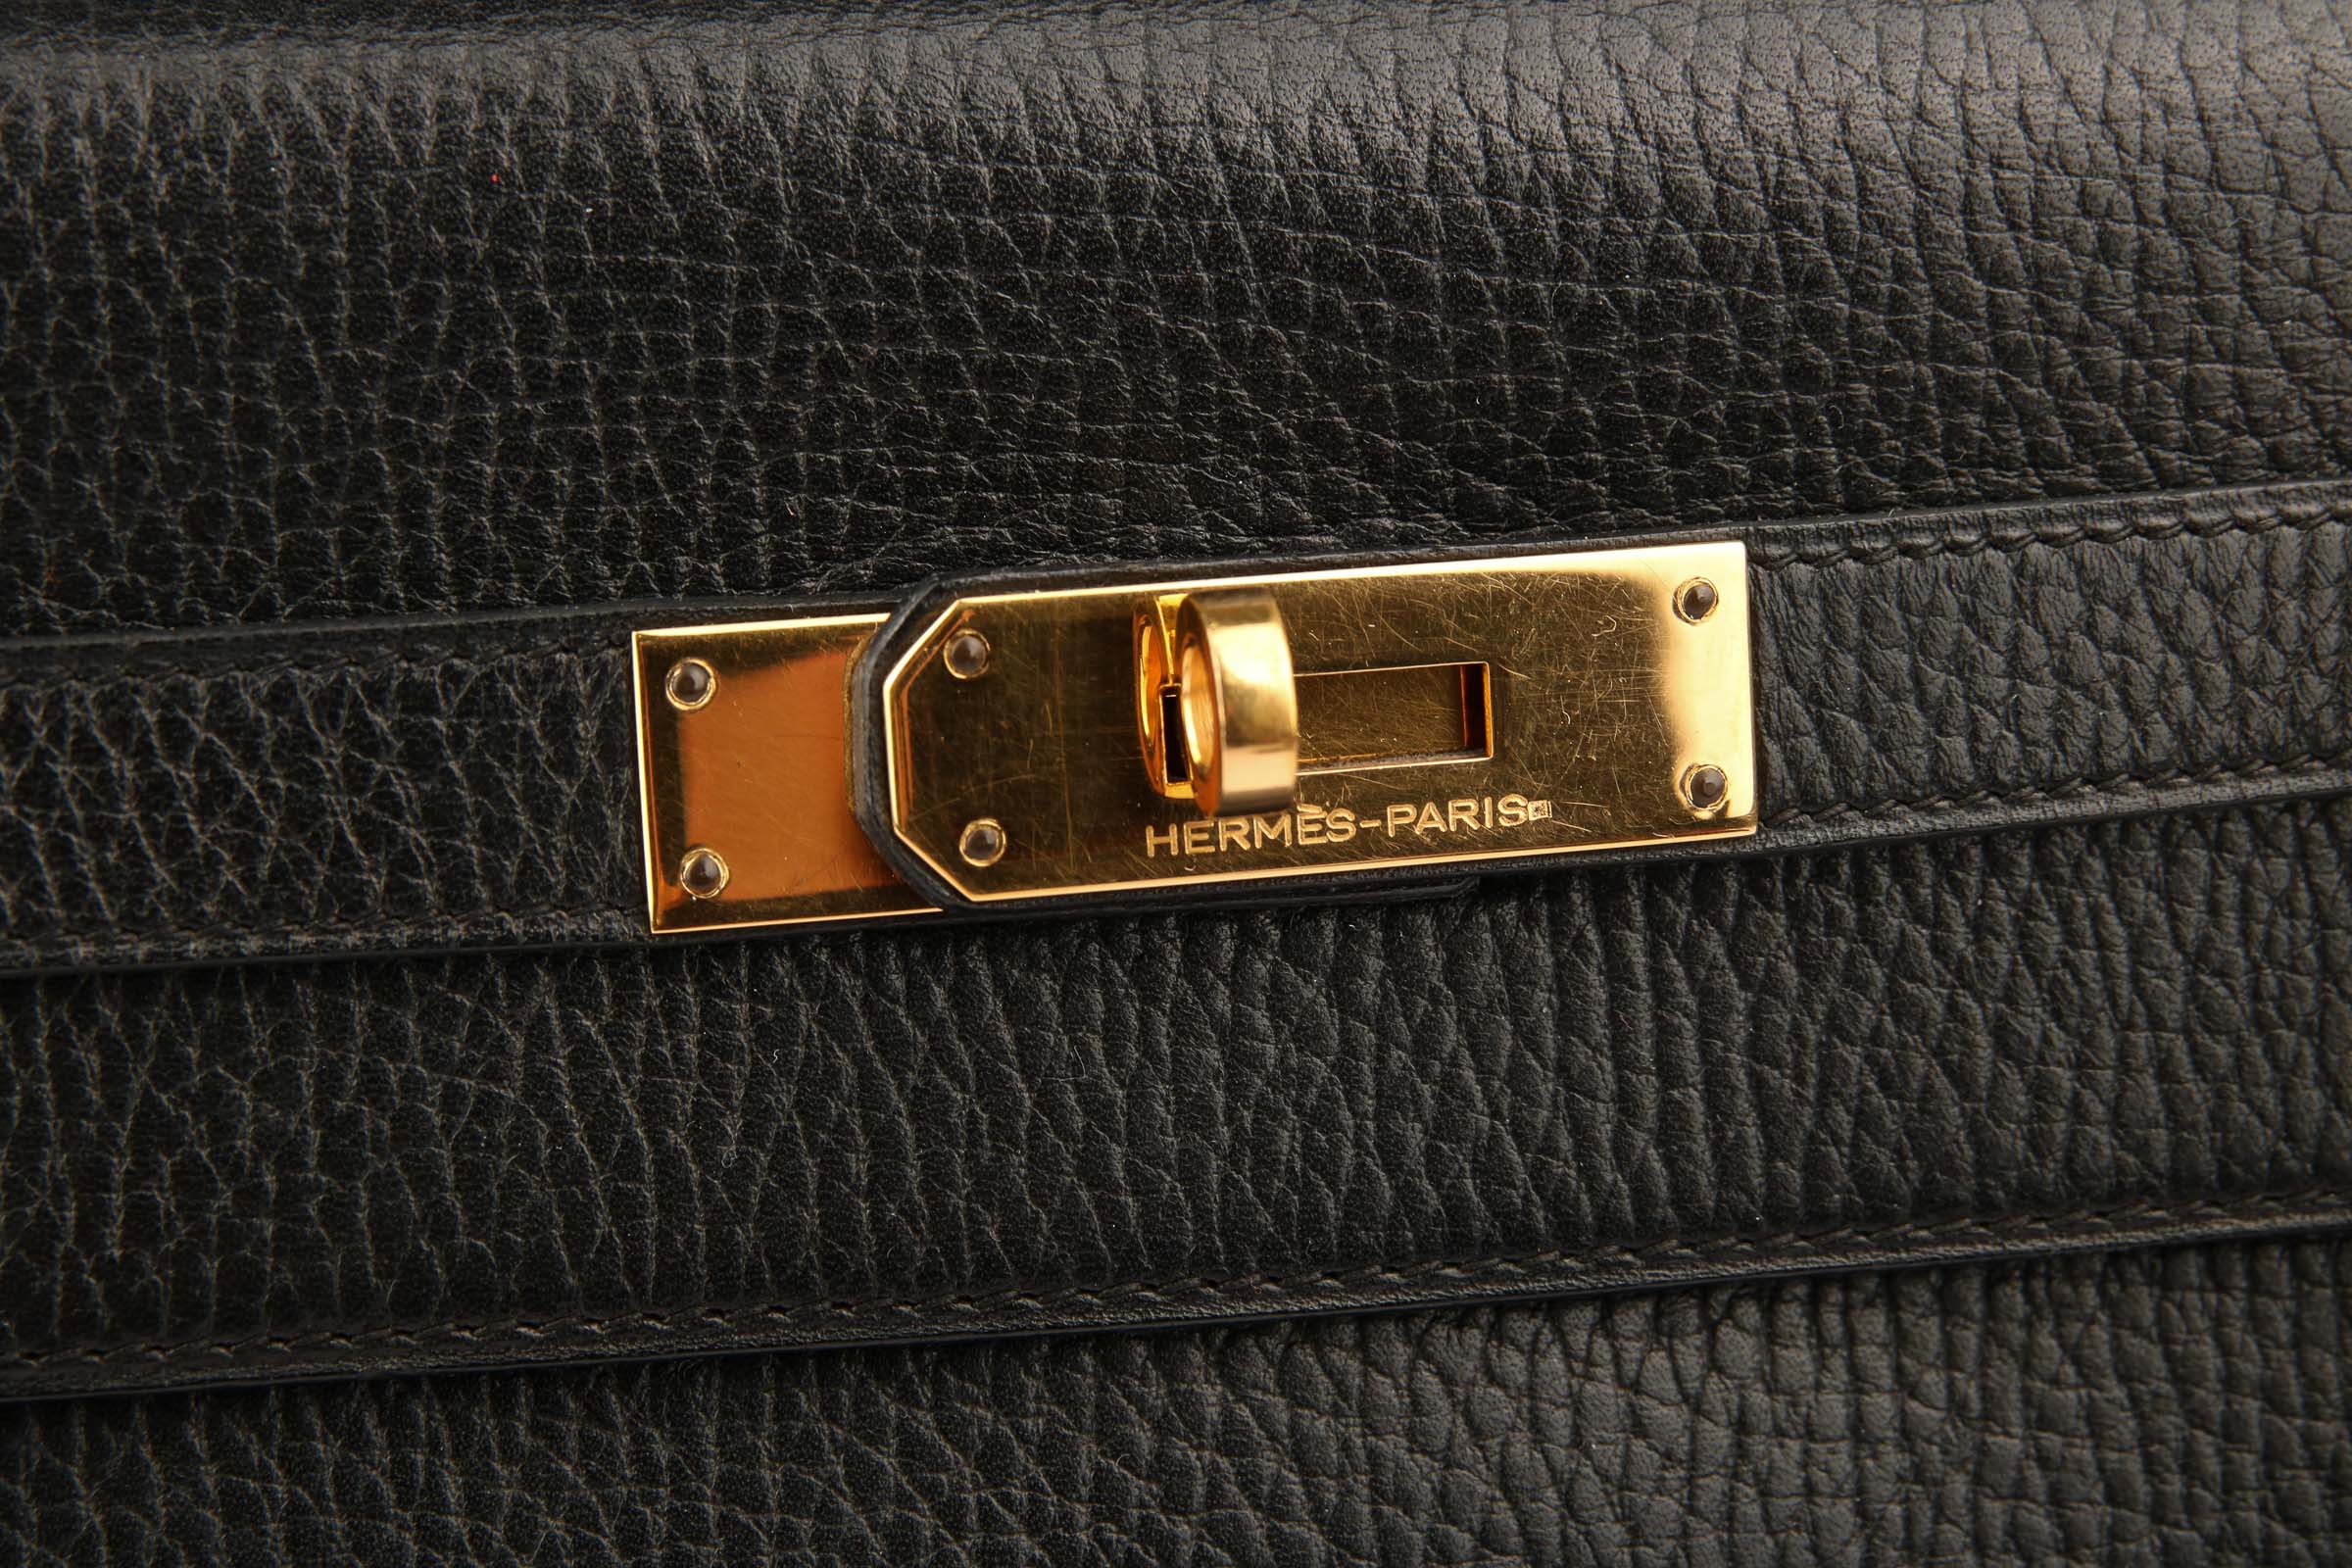 Hermes Kelly Handbag Noir Ardennes with Gold Hardware 35 Black